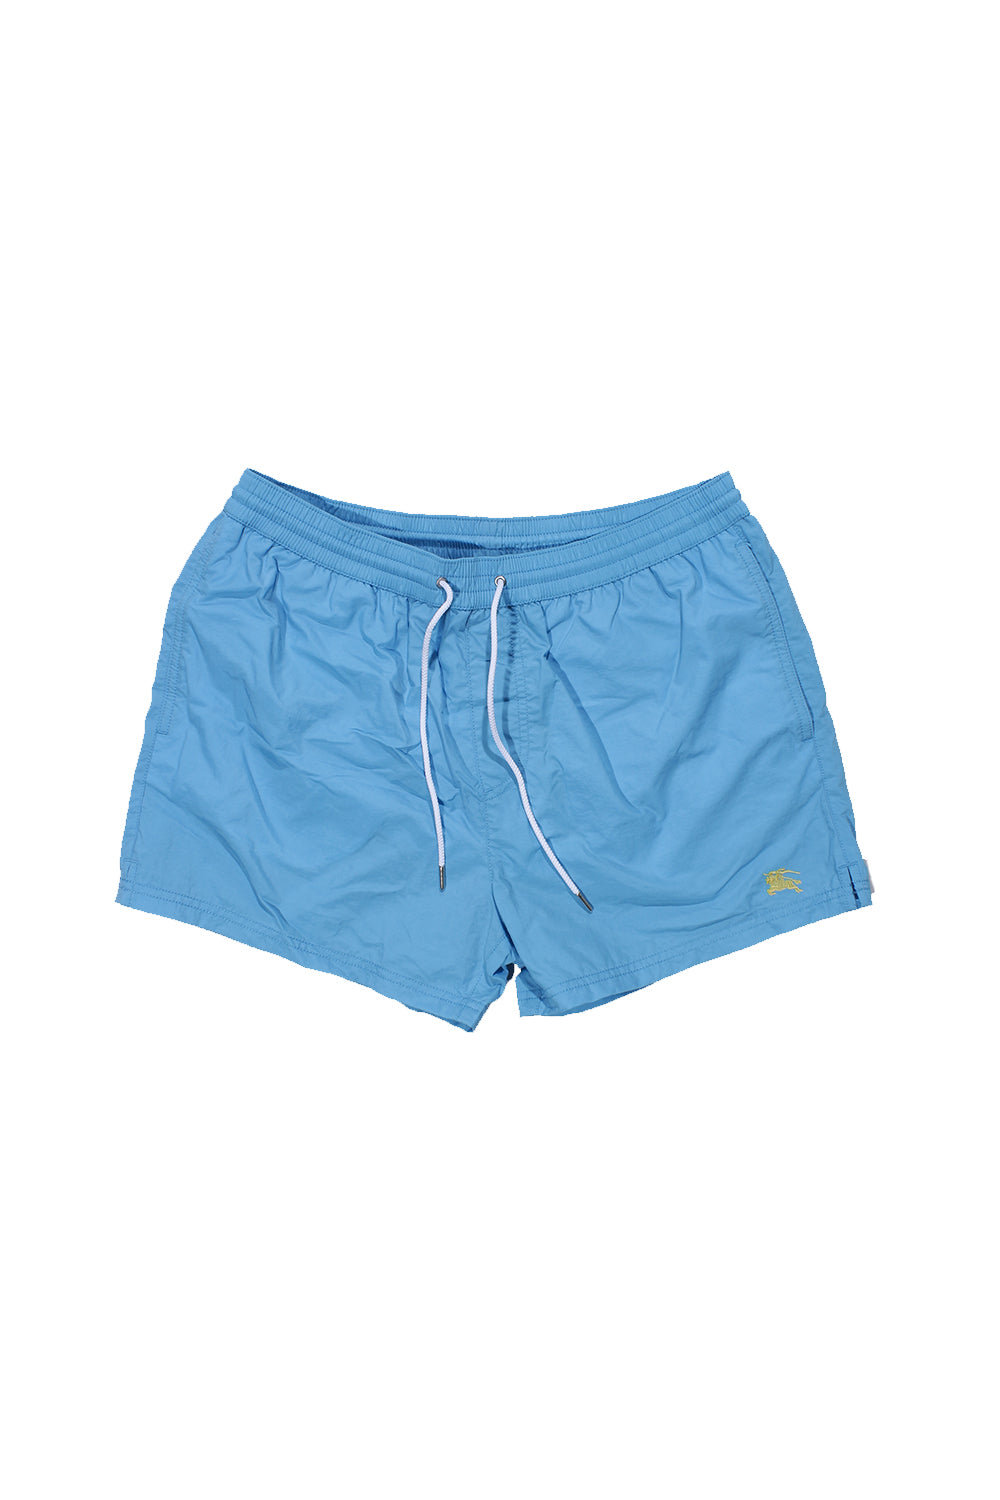 Burberry swim shorts